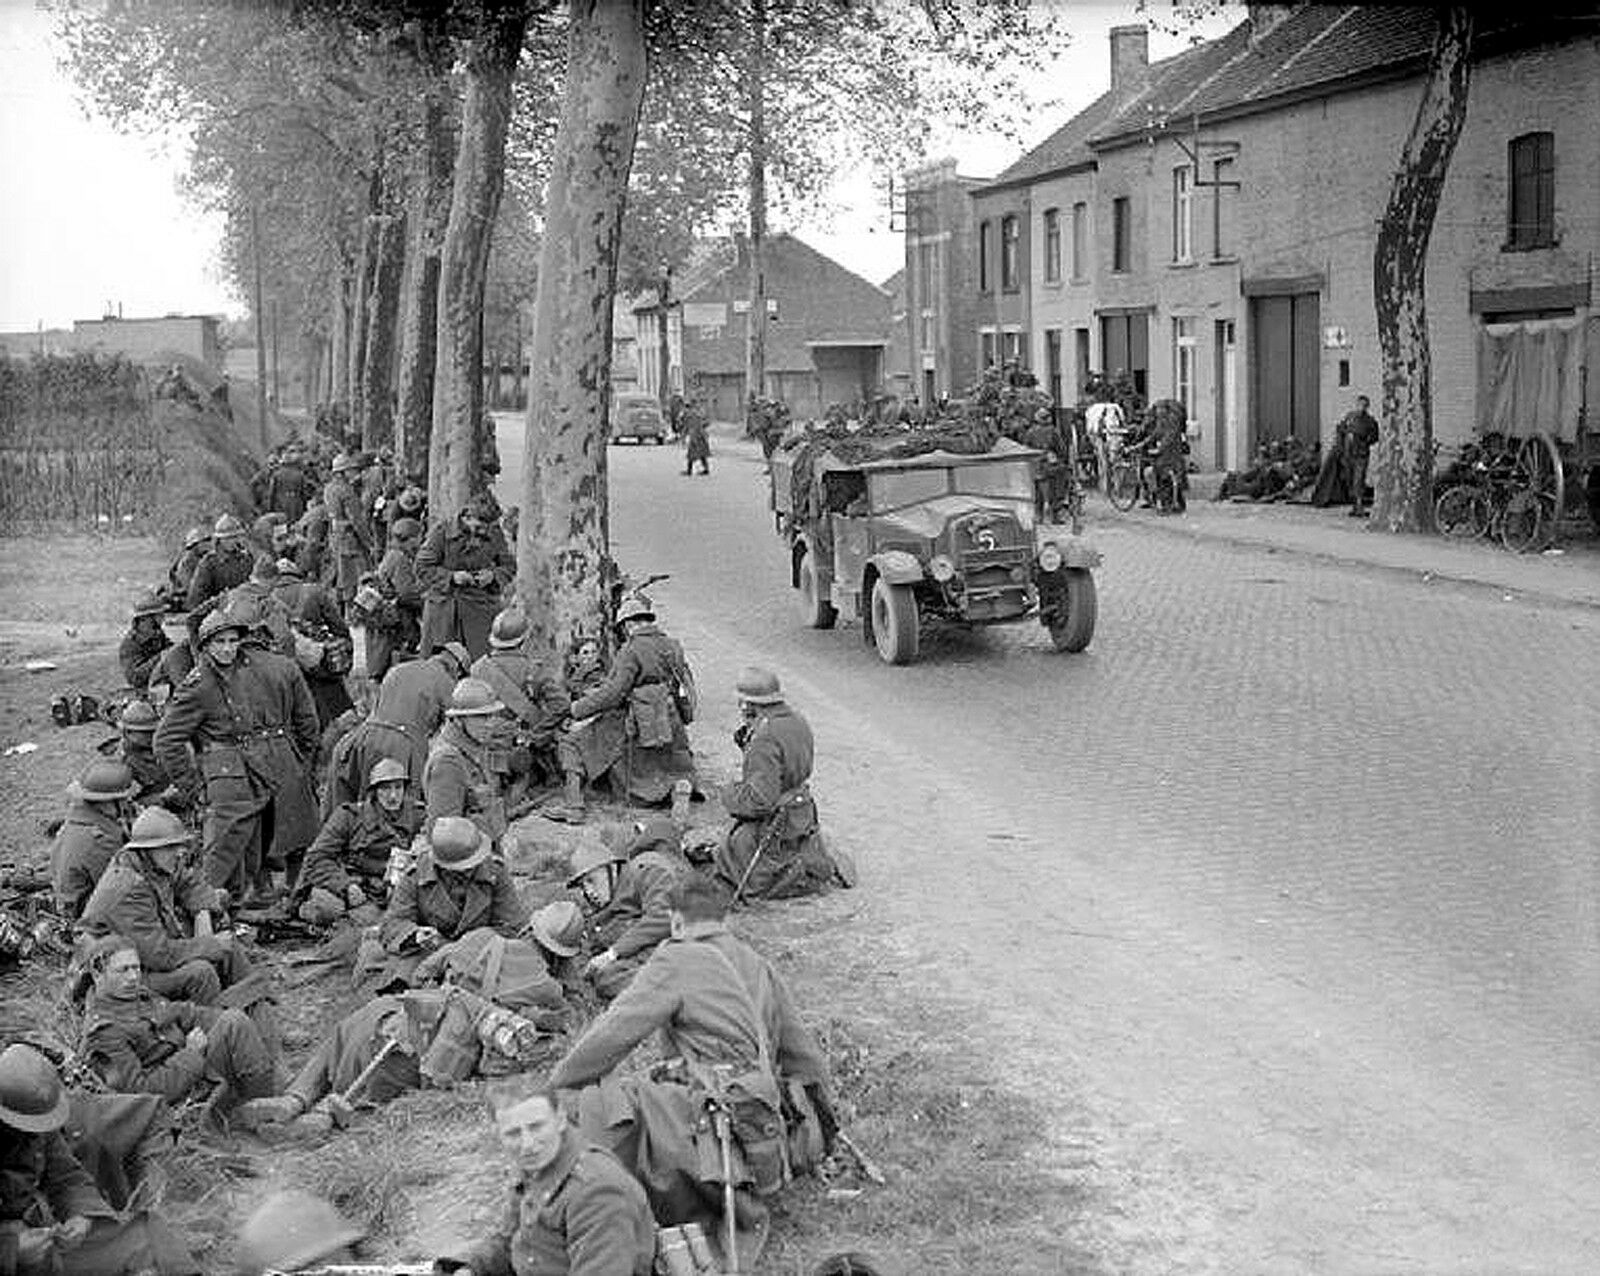 Ww 2 Photo Belgian Troops Resting By The Roadside In Louvain, Belgium May 1940